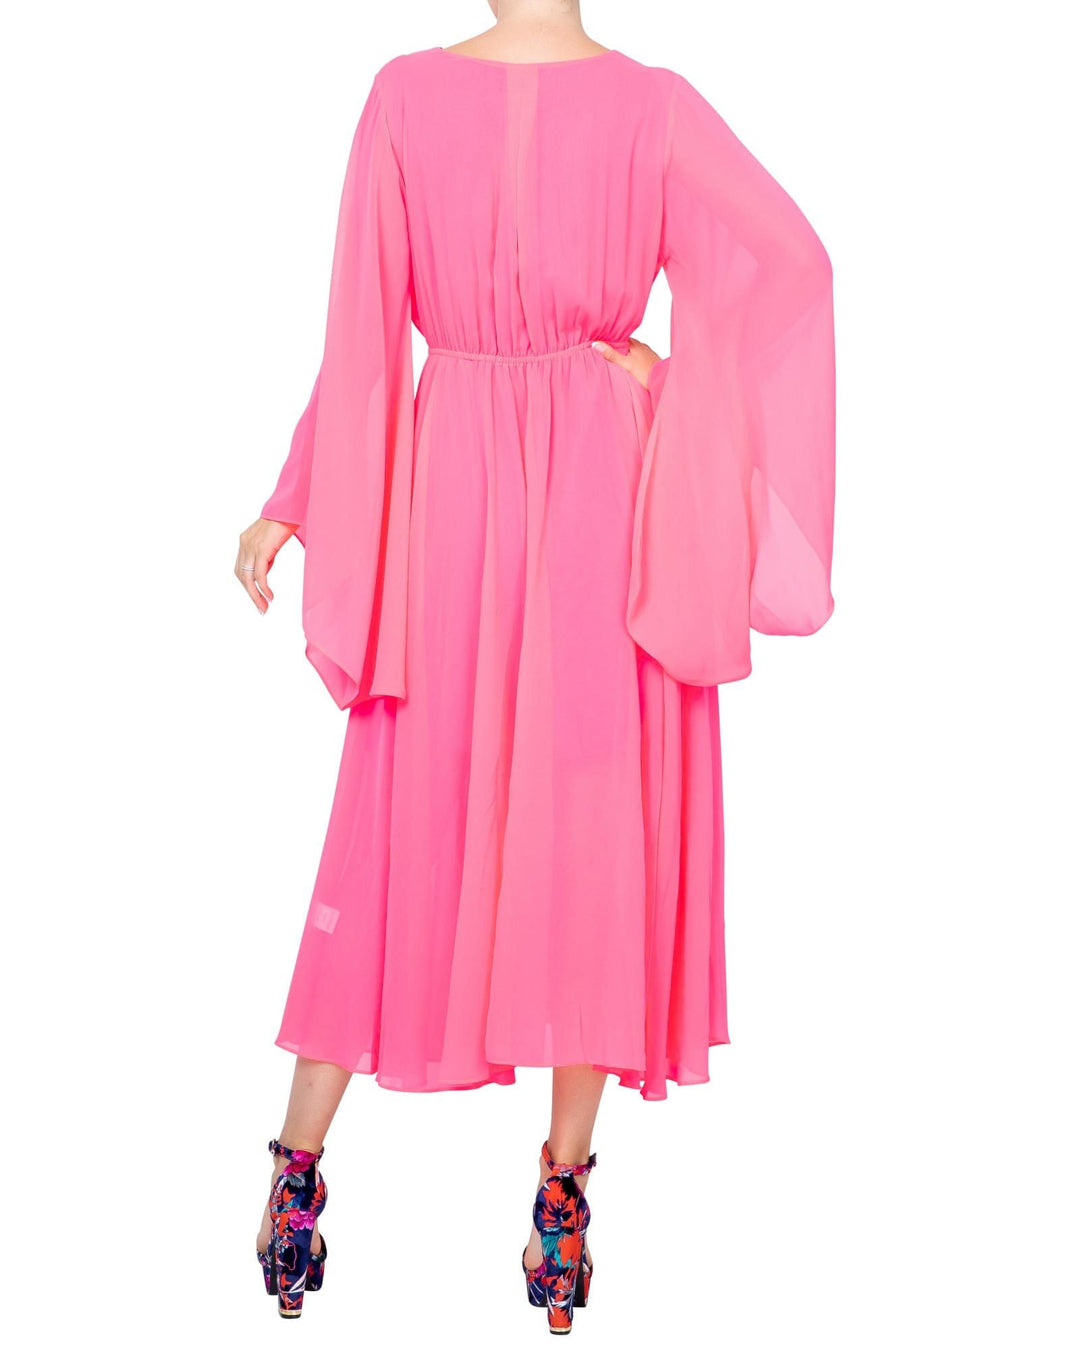 Sunset Midi Dress - Neon Pink by Meghan Fabulous